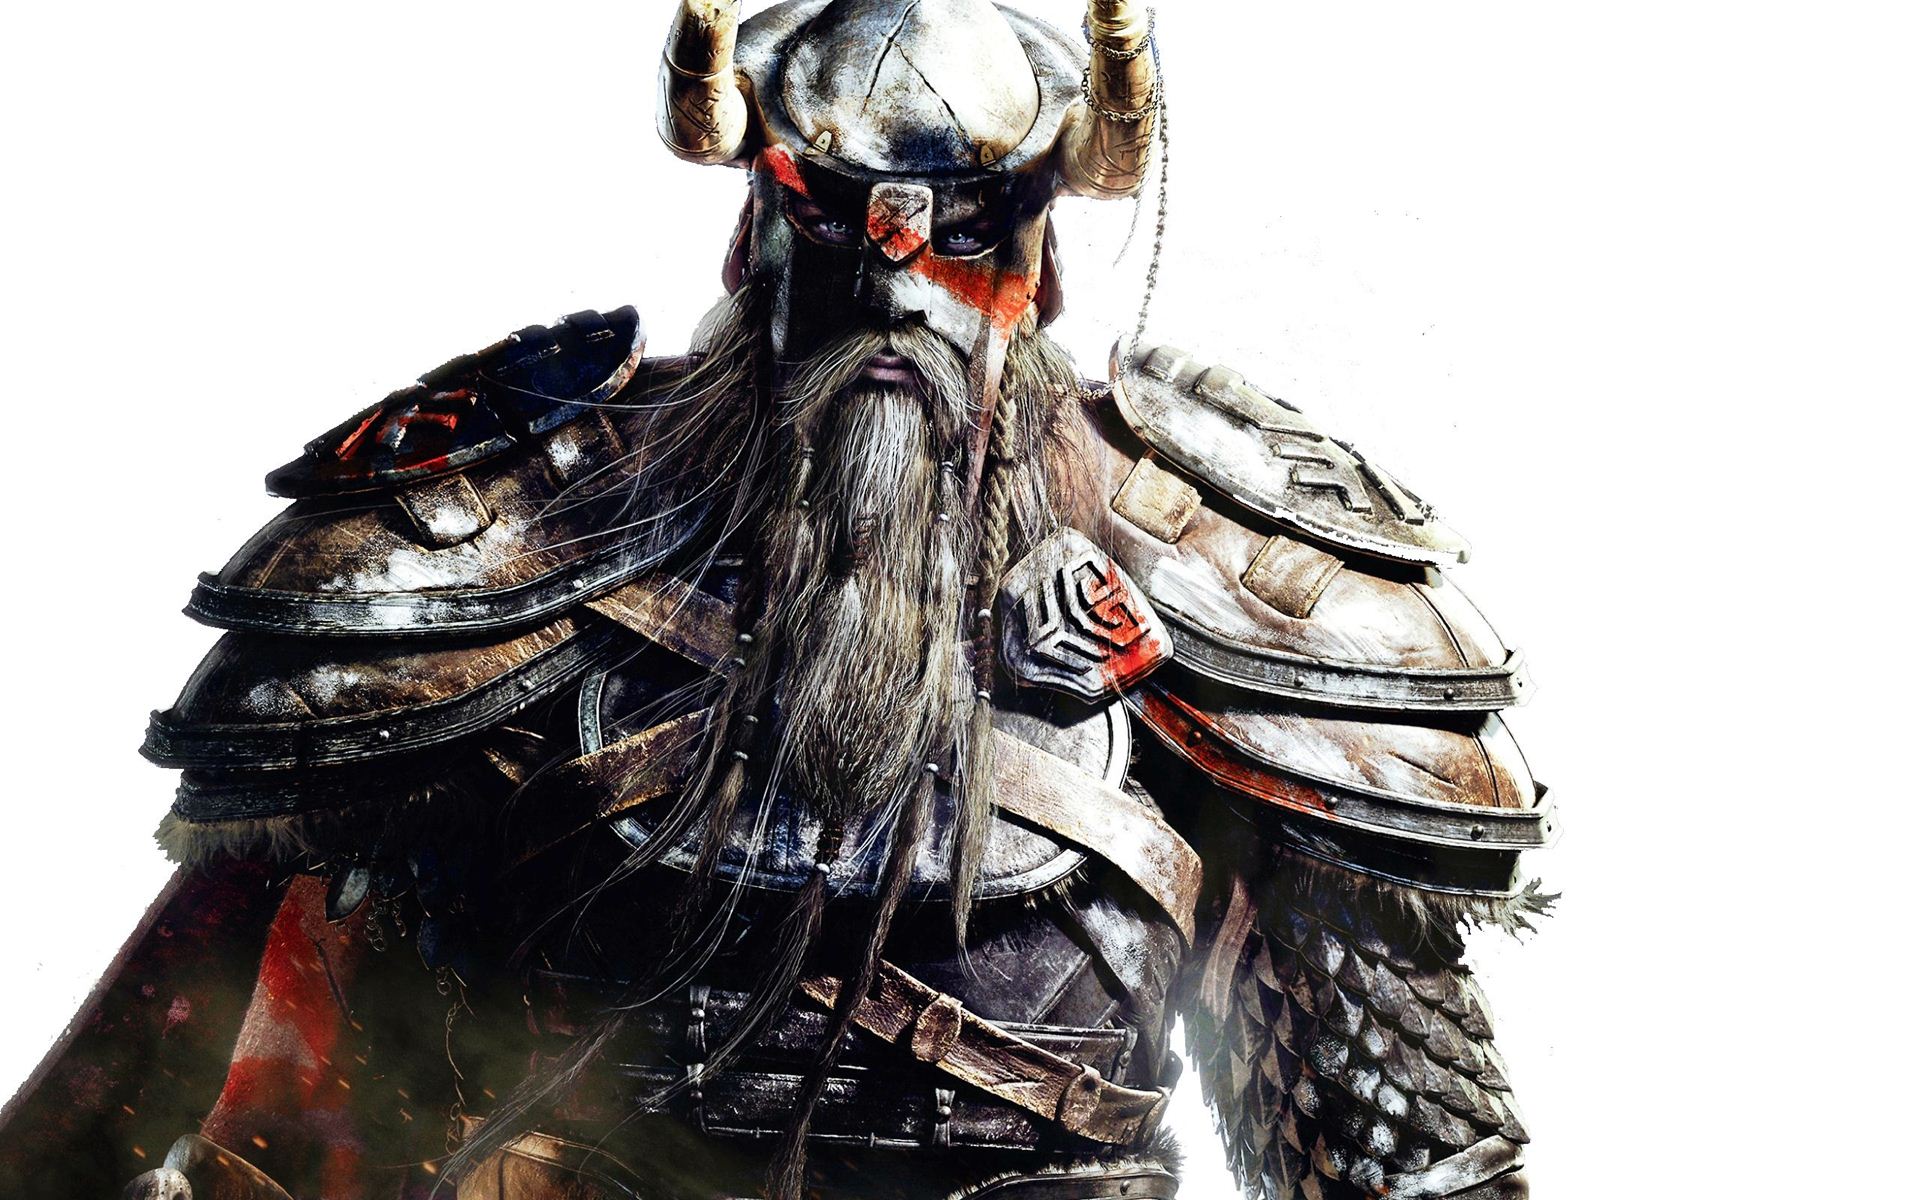 elder scrolls online wallpaper hd,illustration,cg artwork,knight,action figure,warlord